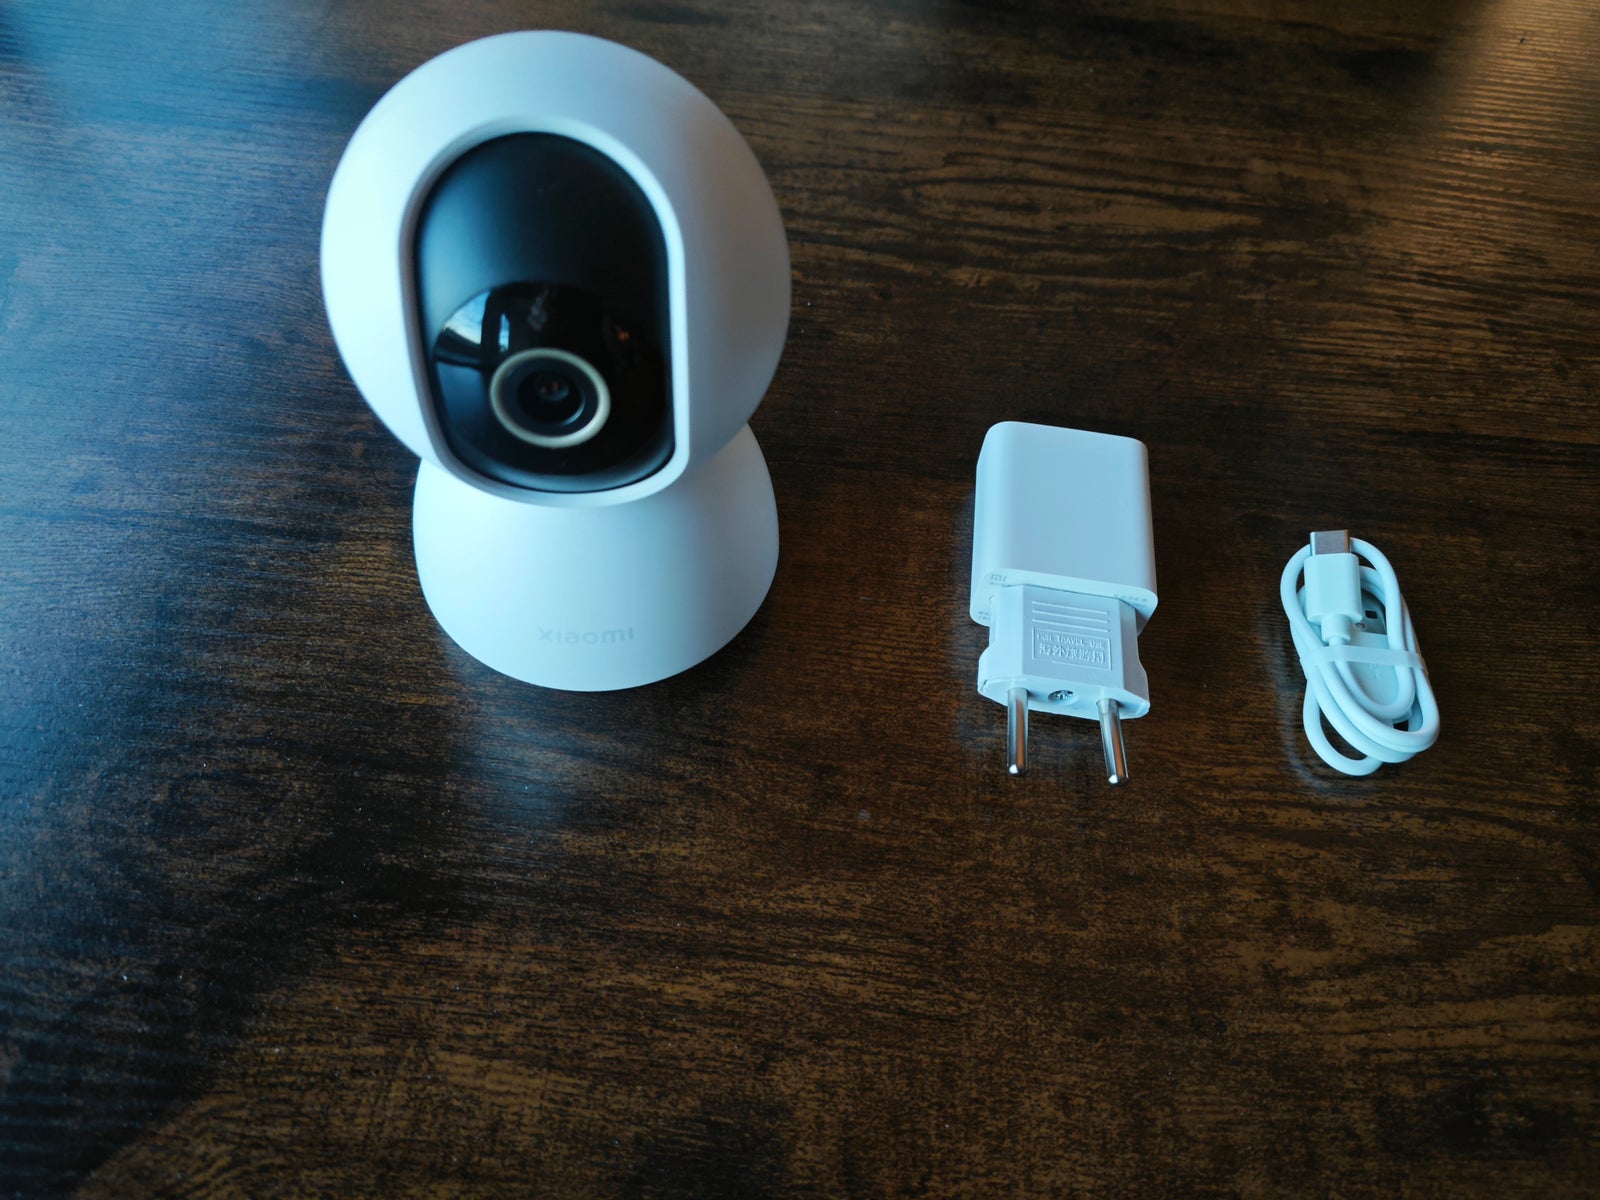 Overvågningskamera, Xiaomi Mi 360 Home Security Camera 2K